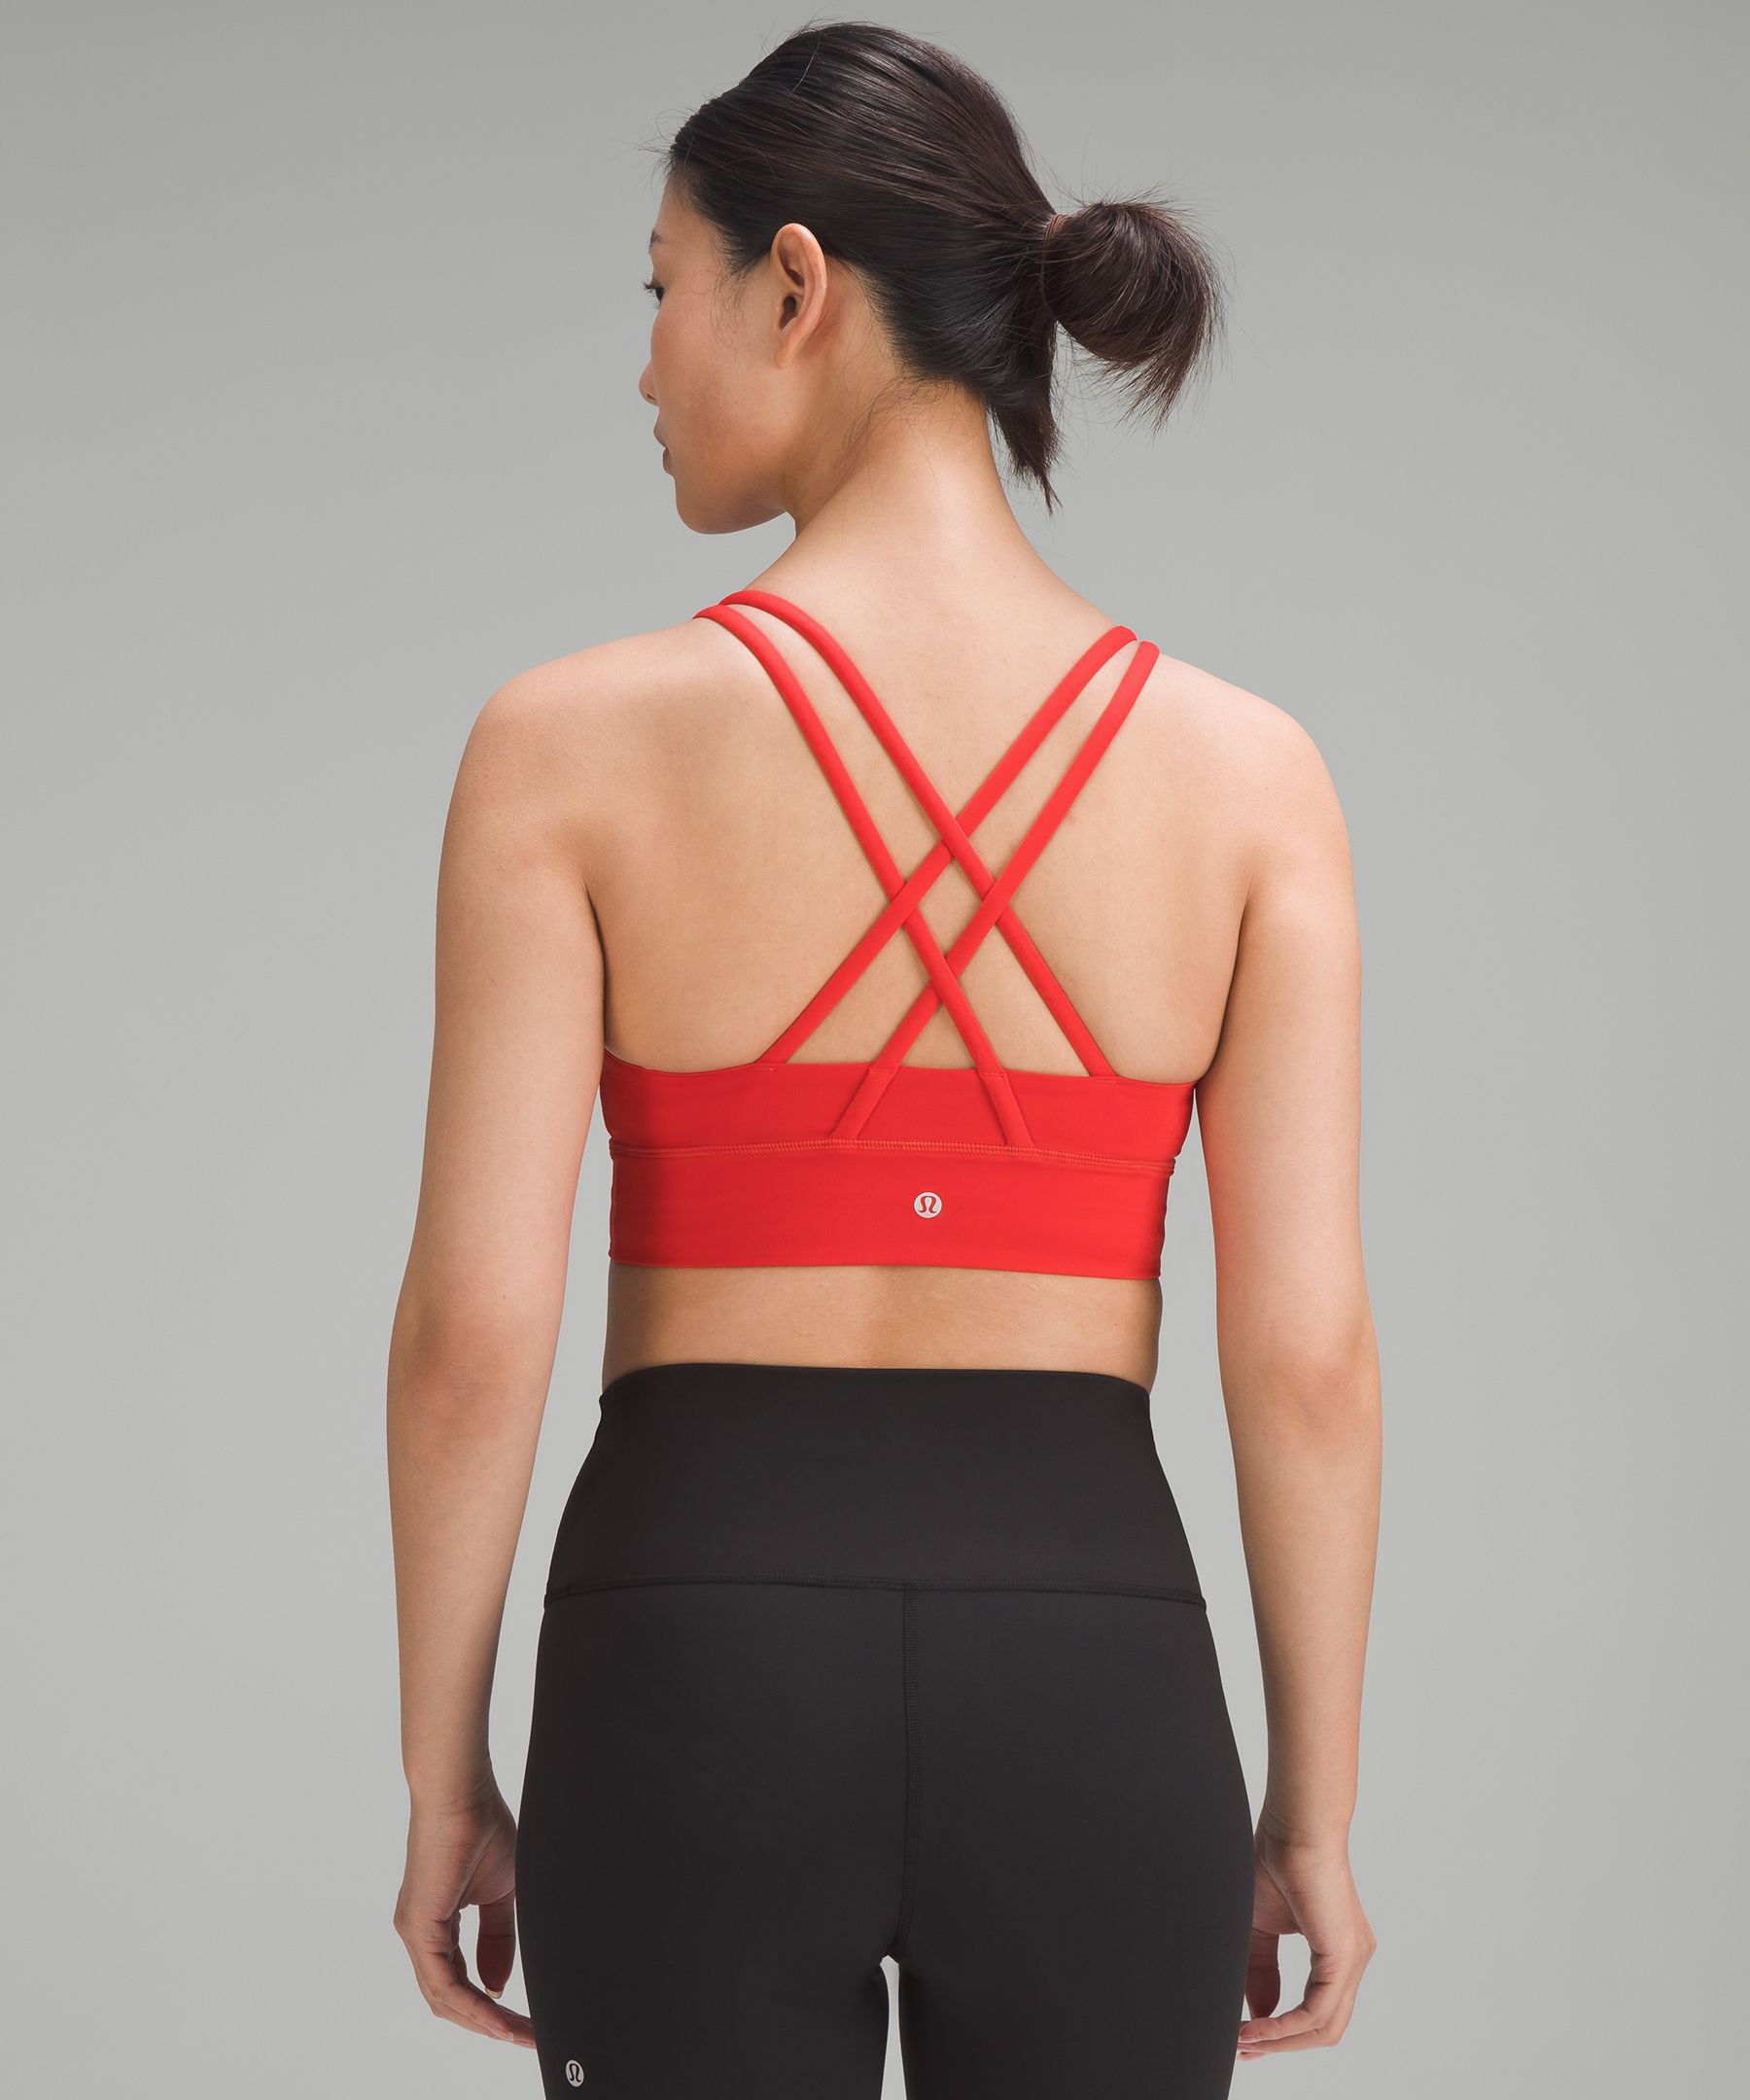 Lululemon New Yoga Sports bra Lycra Tecido De Sexy Costas Soutien